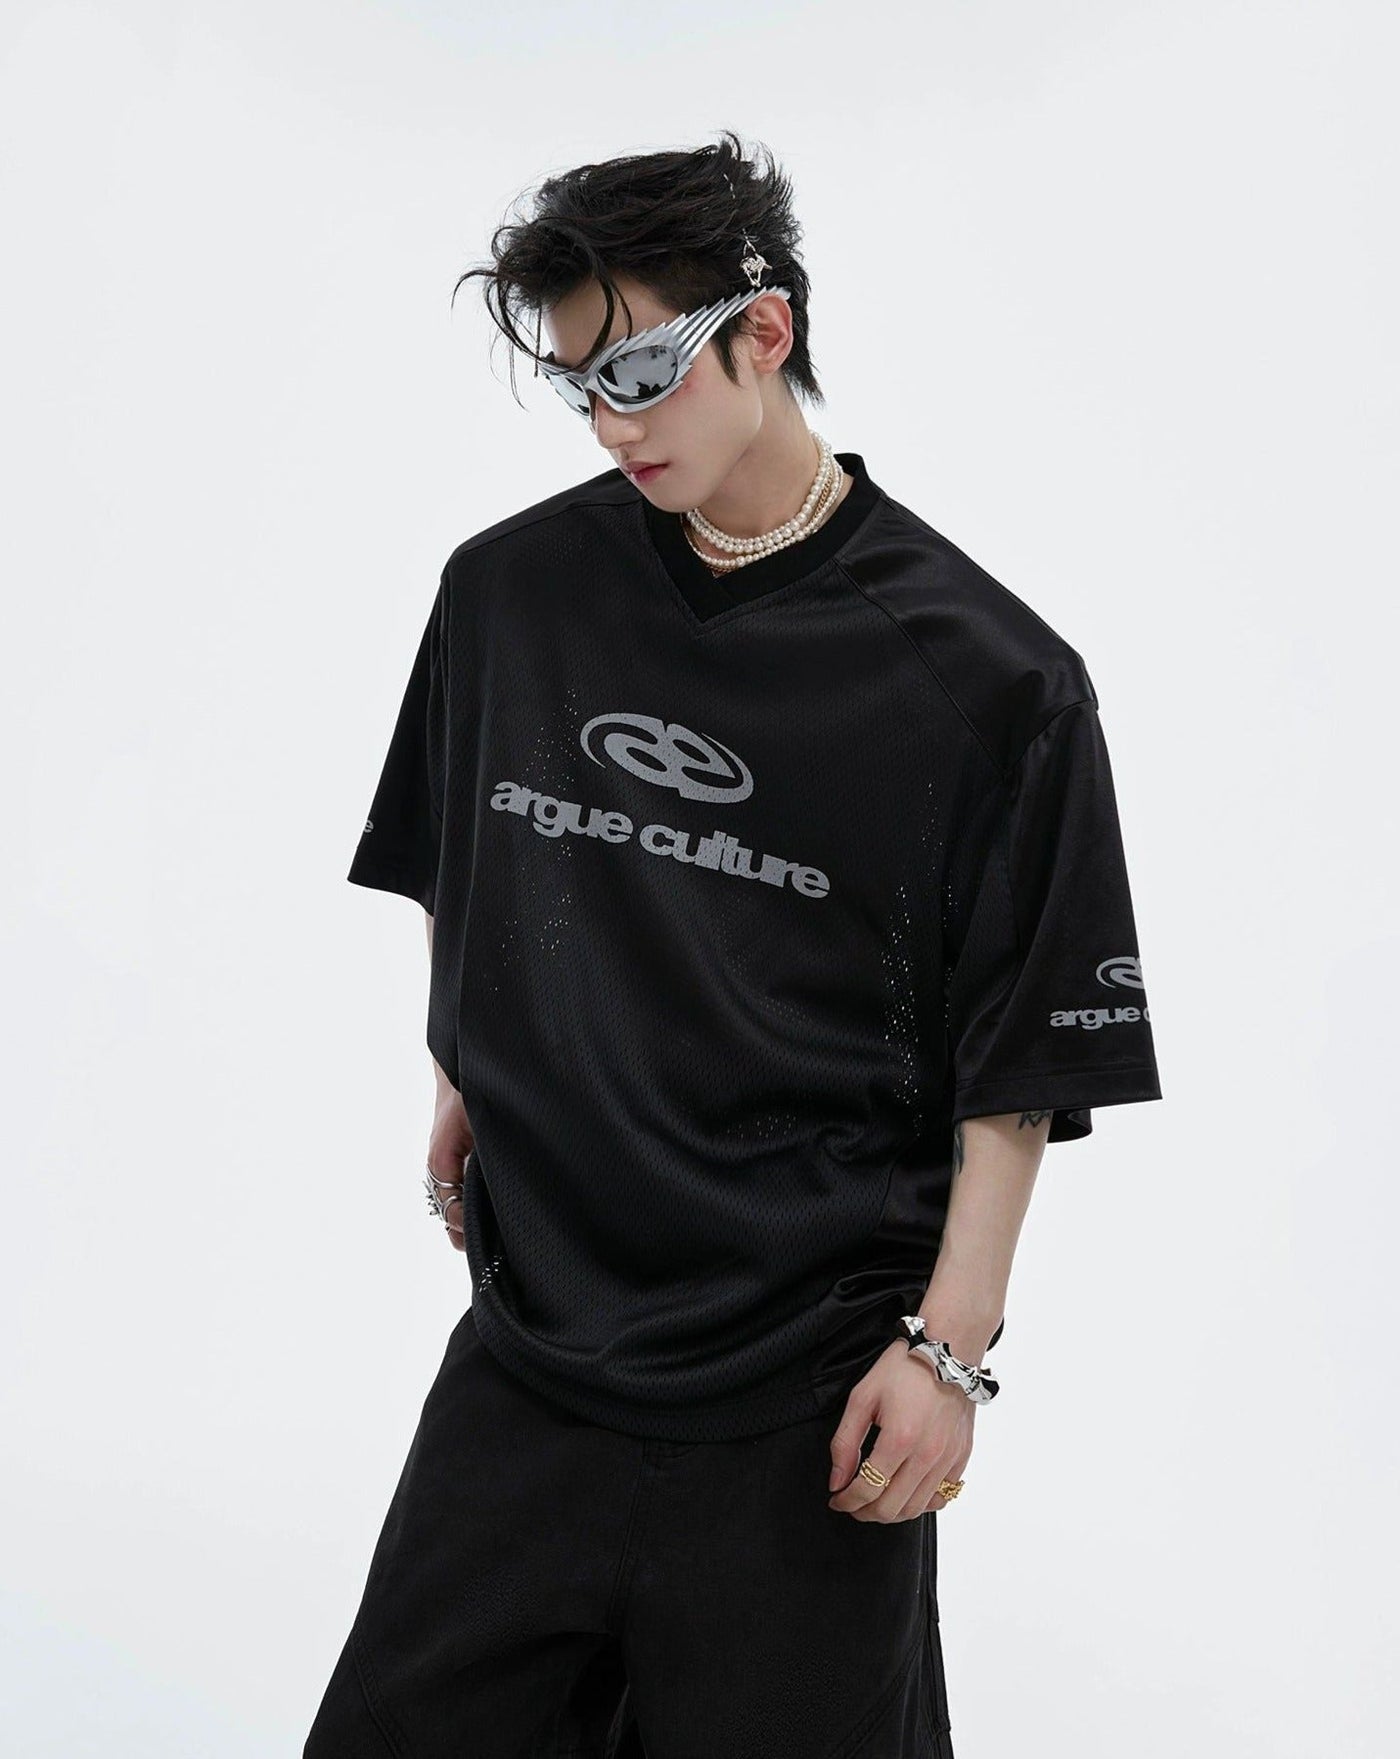 Mesh Shiny Shoulder T-Shirt Korean Street Fashion T-Shirt By Argue Culture Shop Online at OH Vault